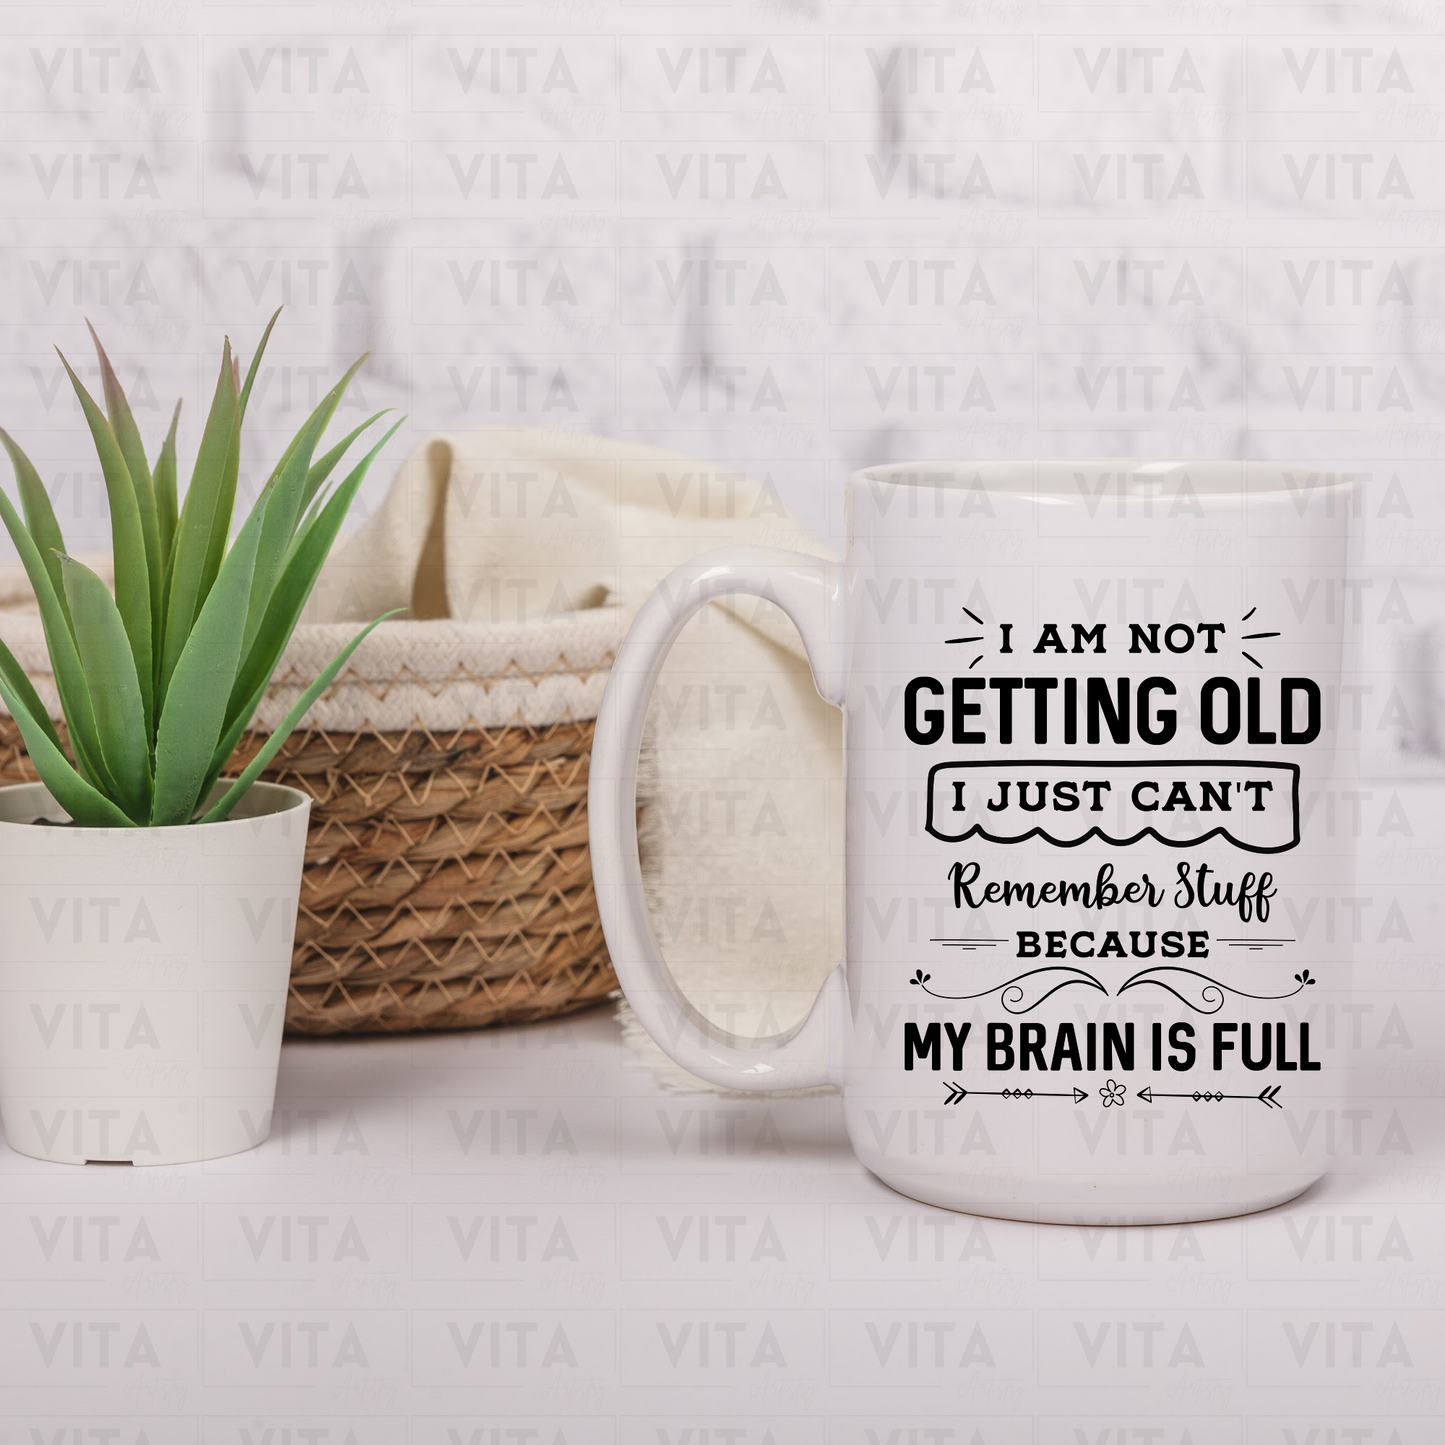 I'm Not Getting Old - Sarcastic Ceramic Mug